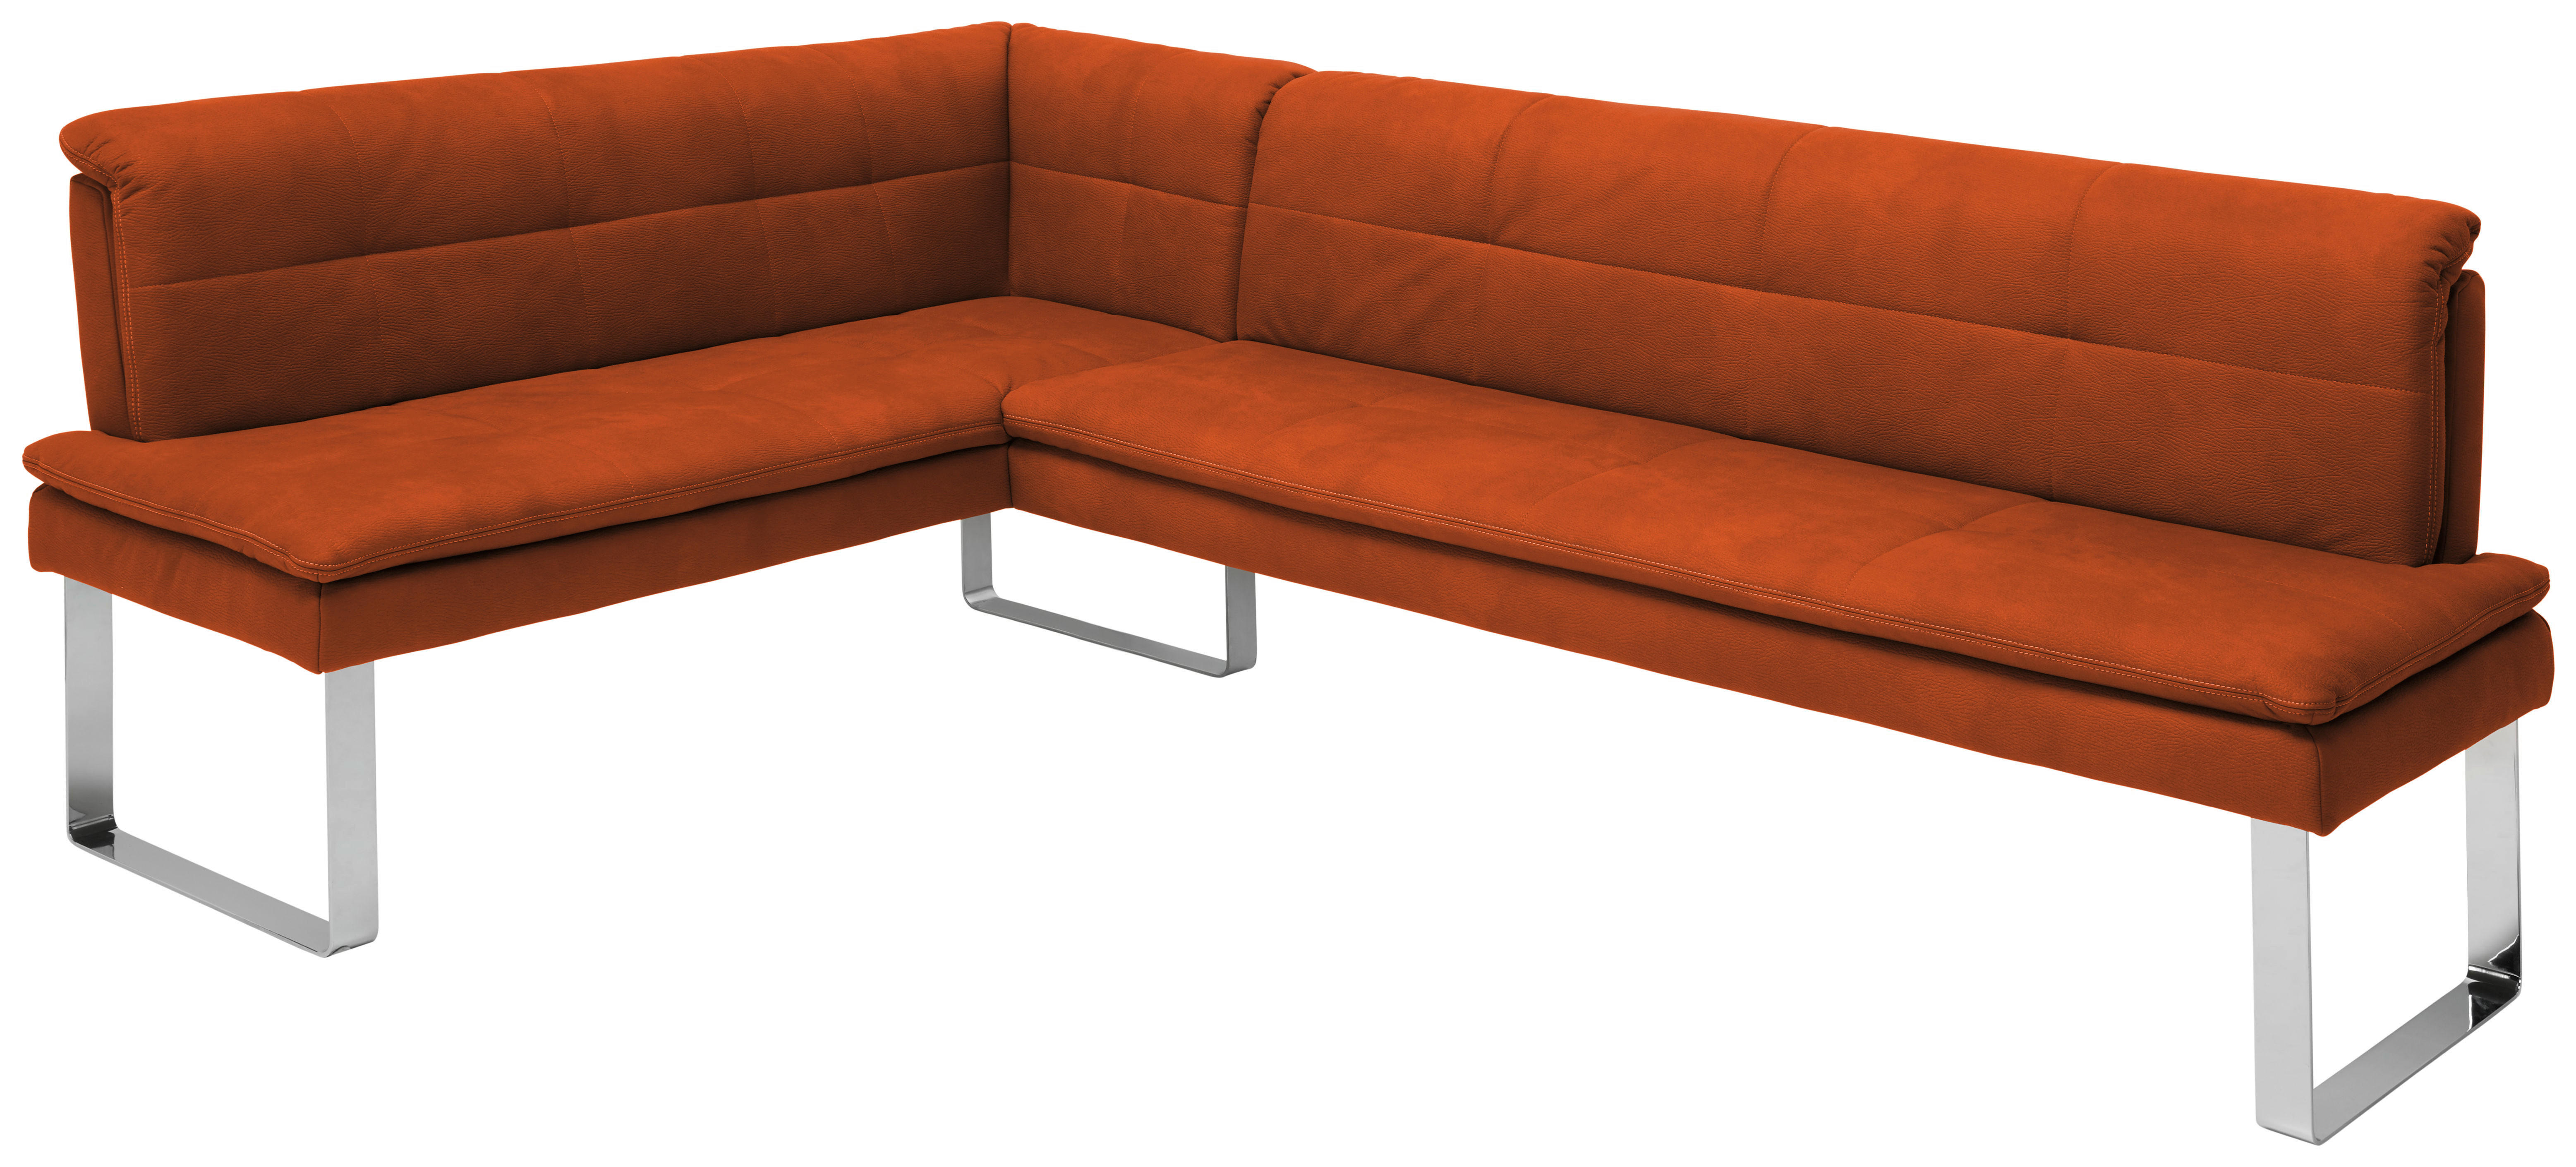 ECKBANK 154/213 cm Mikrofaser Orange, Chromfarben Metall   - Chromfarben/Beige, Design, Textil/Metall (154/213cm) - Novel